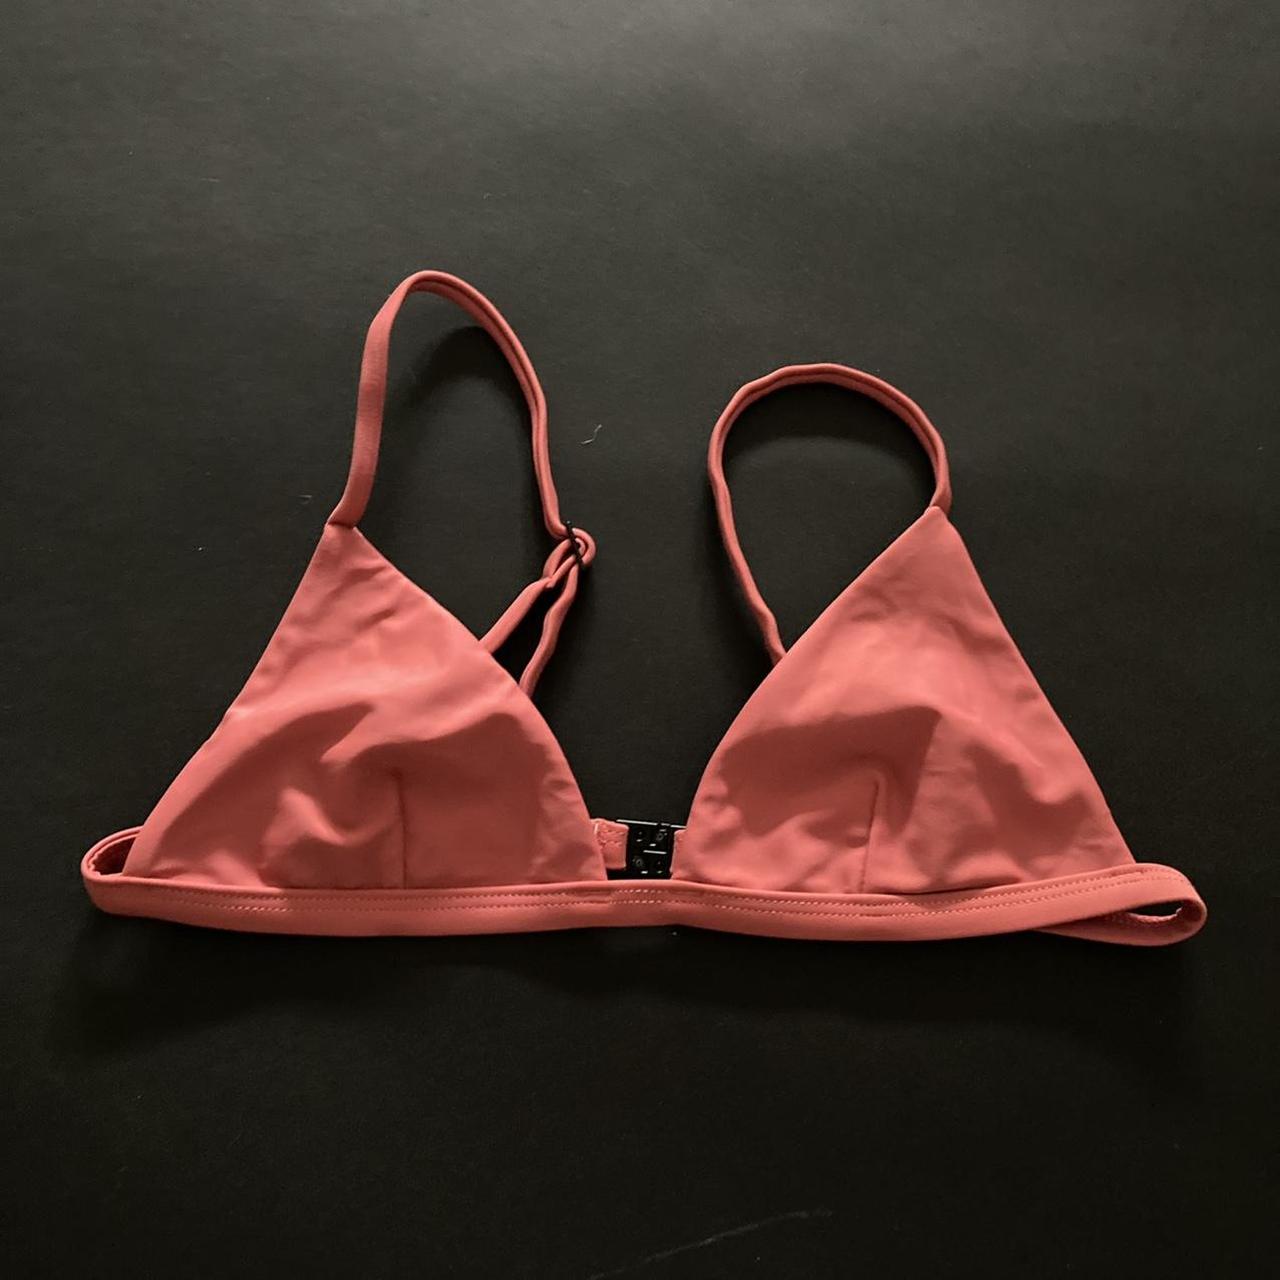 Product Image 1 - • Matteau bikini top size